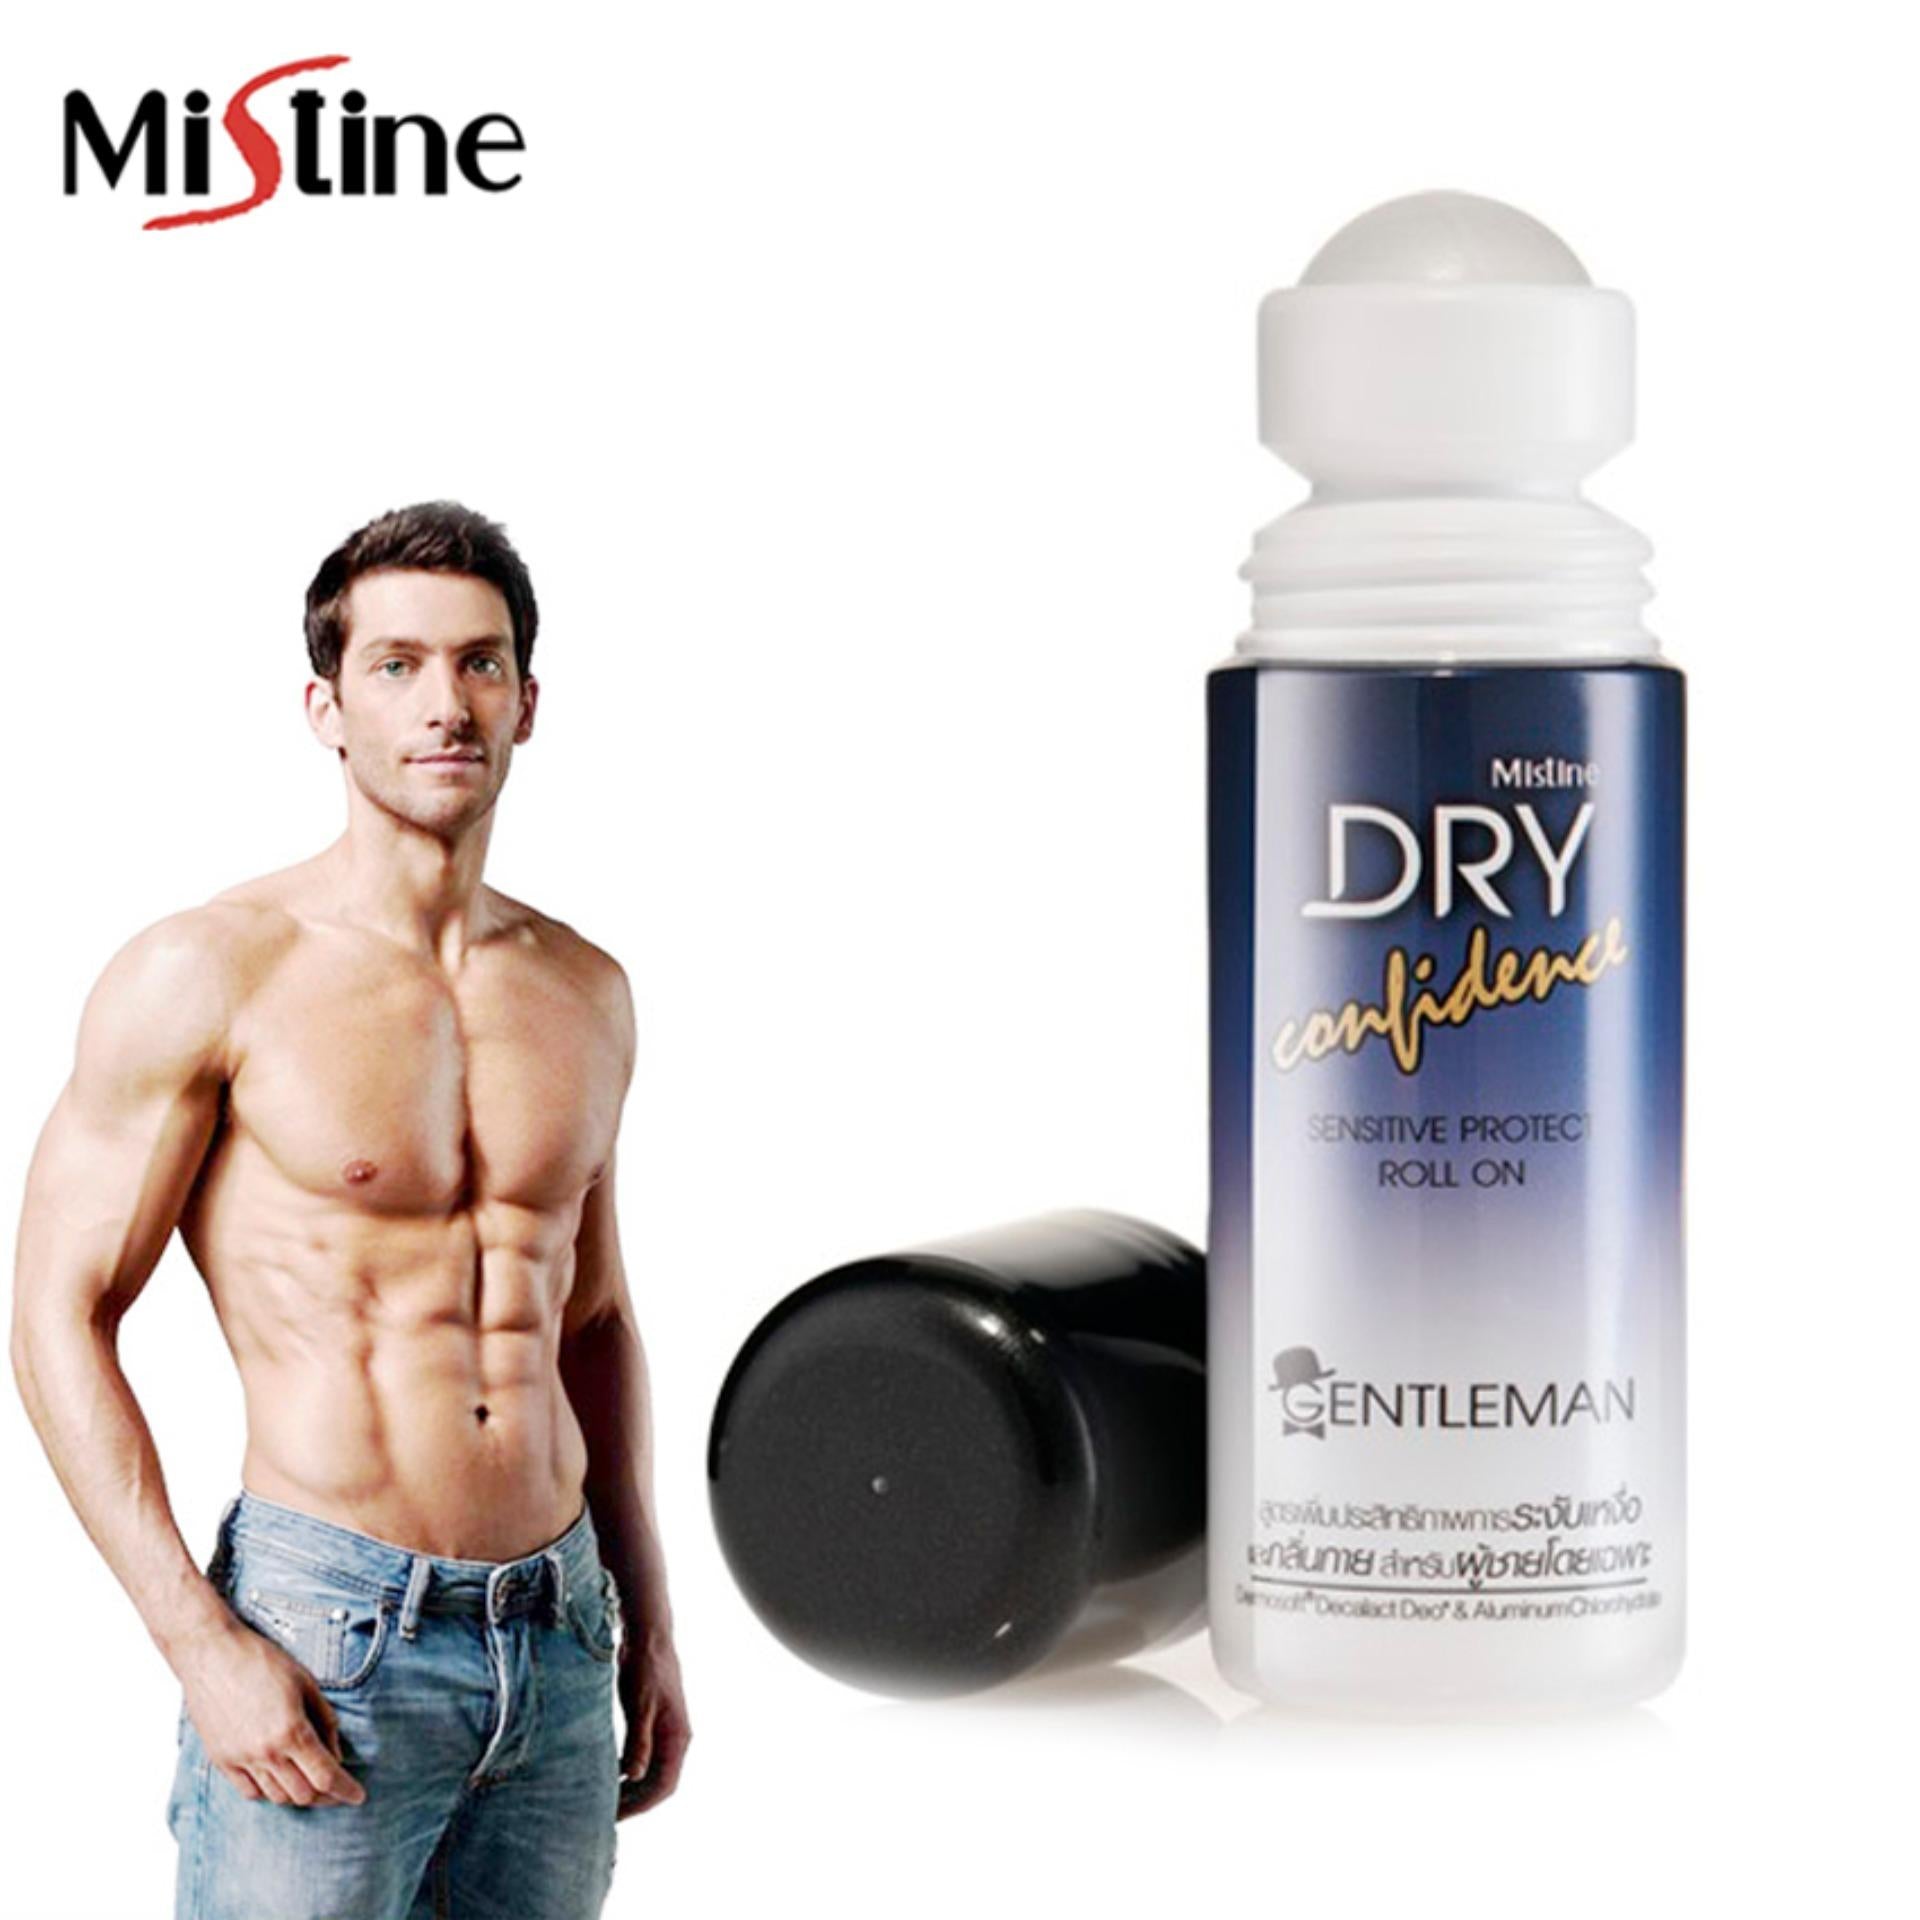 Mistine Dry Confidence Gentleman Roll-on Deodorant 50 ml., Дезодорант для мужчин "Конфиденциальность" 50 мл.